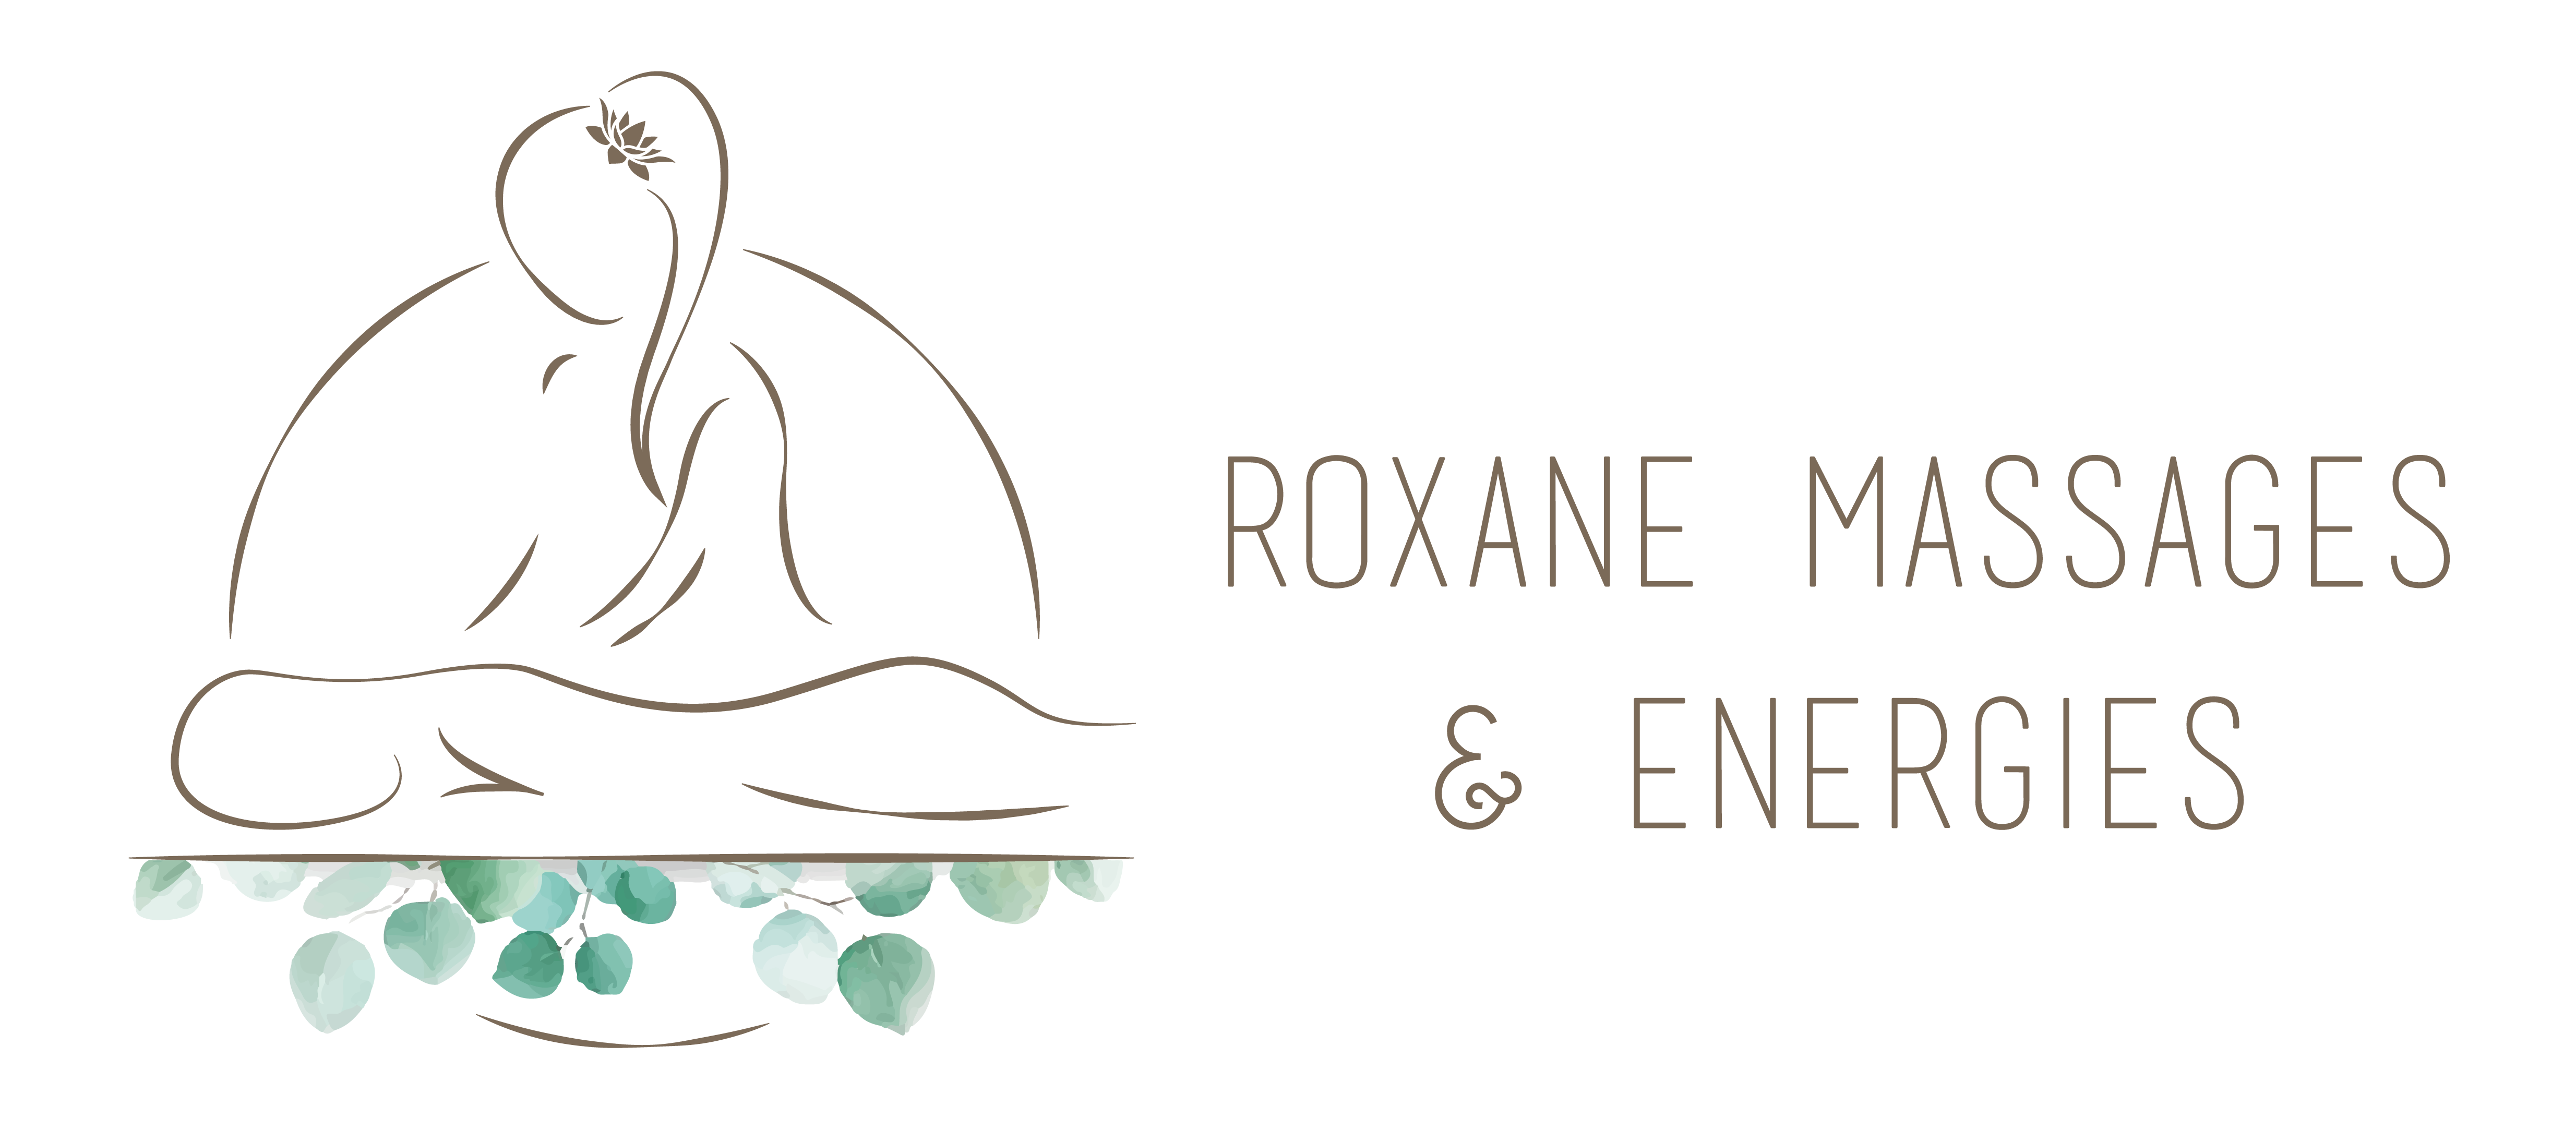 Roxane massages & energies logo